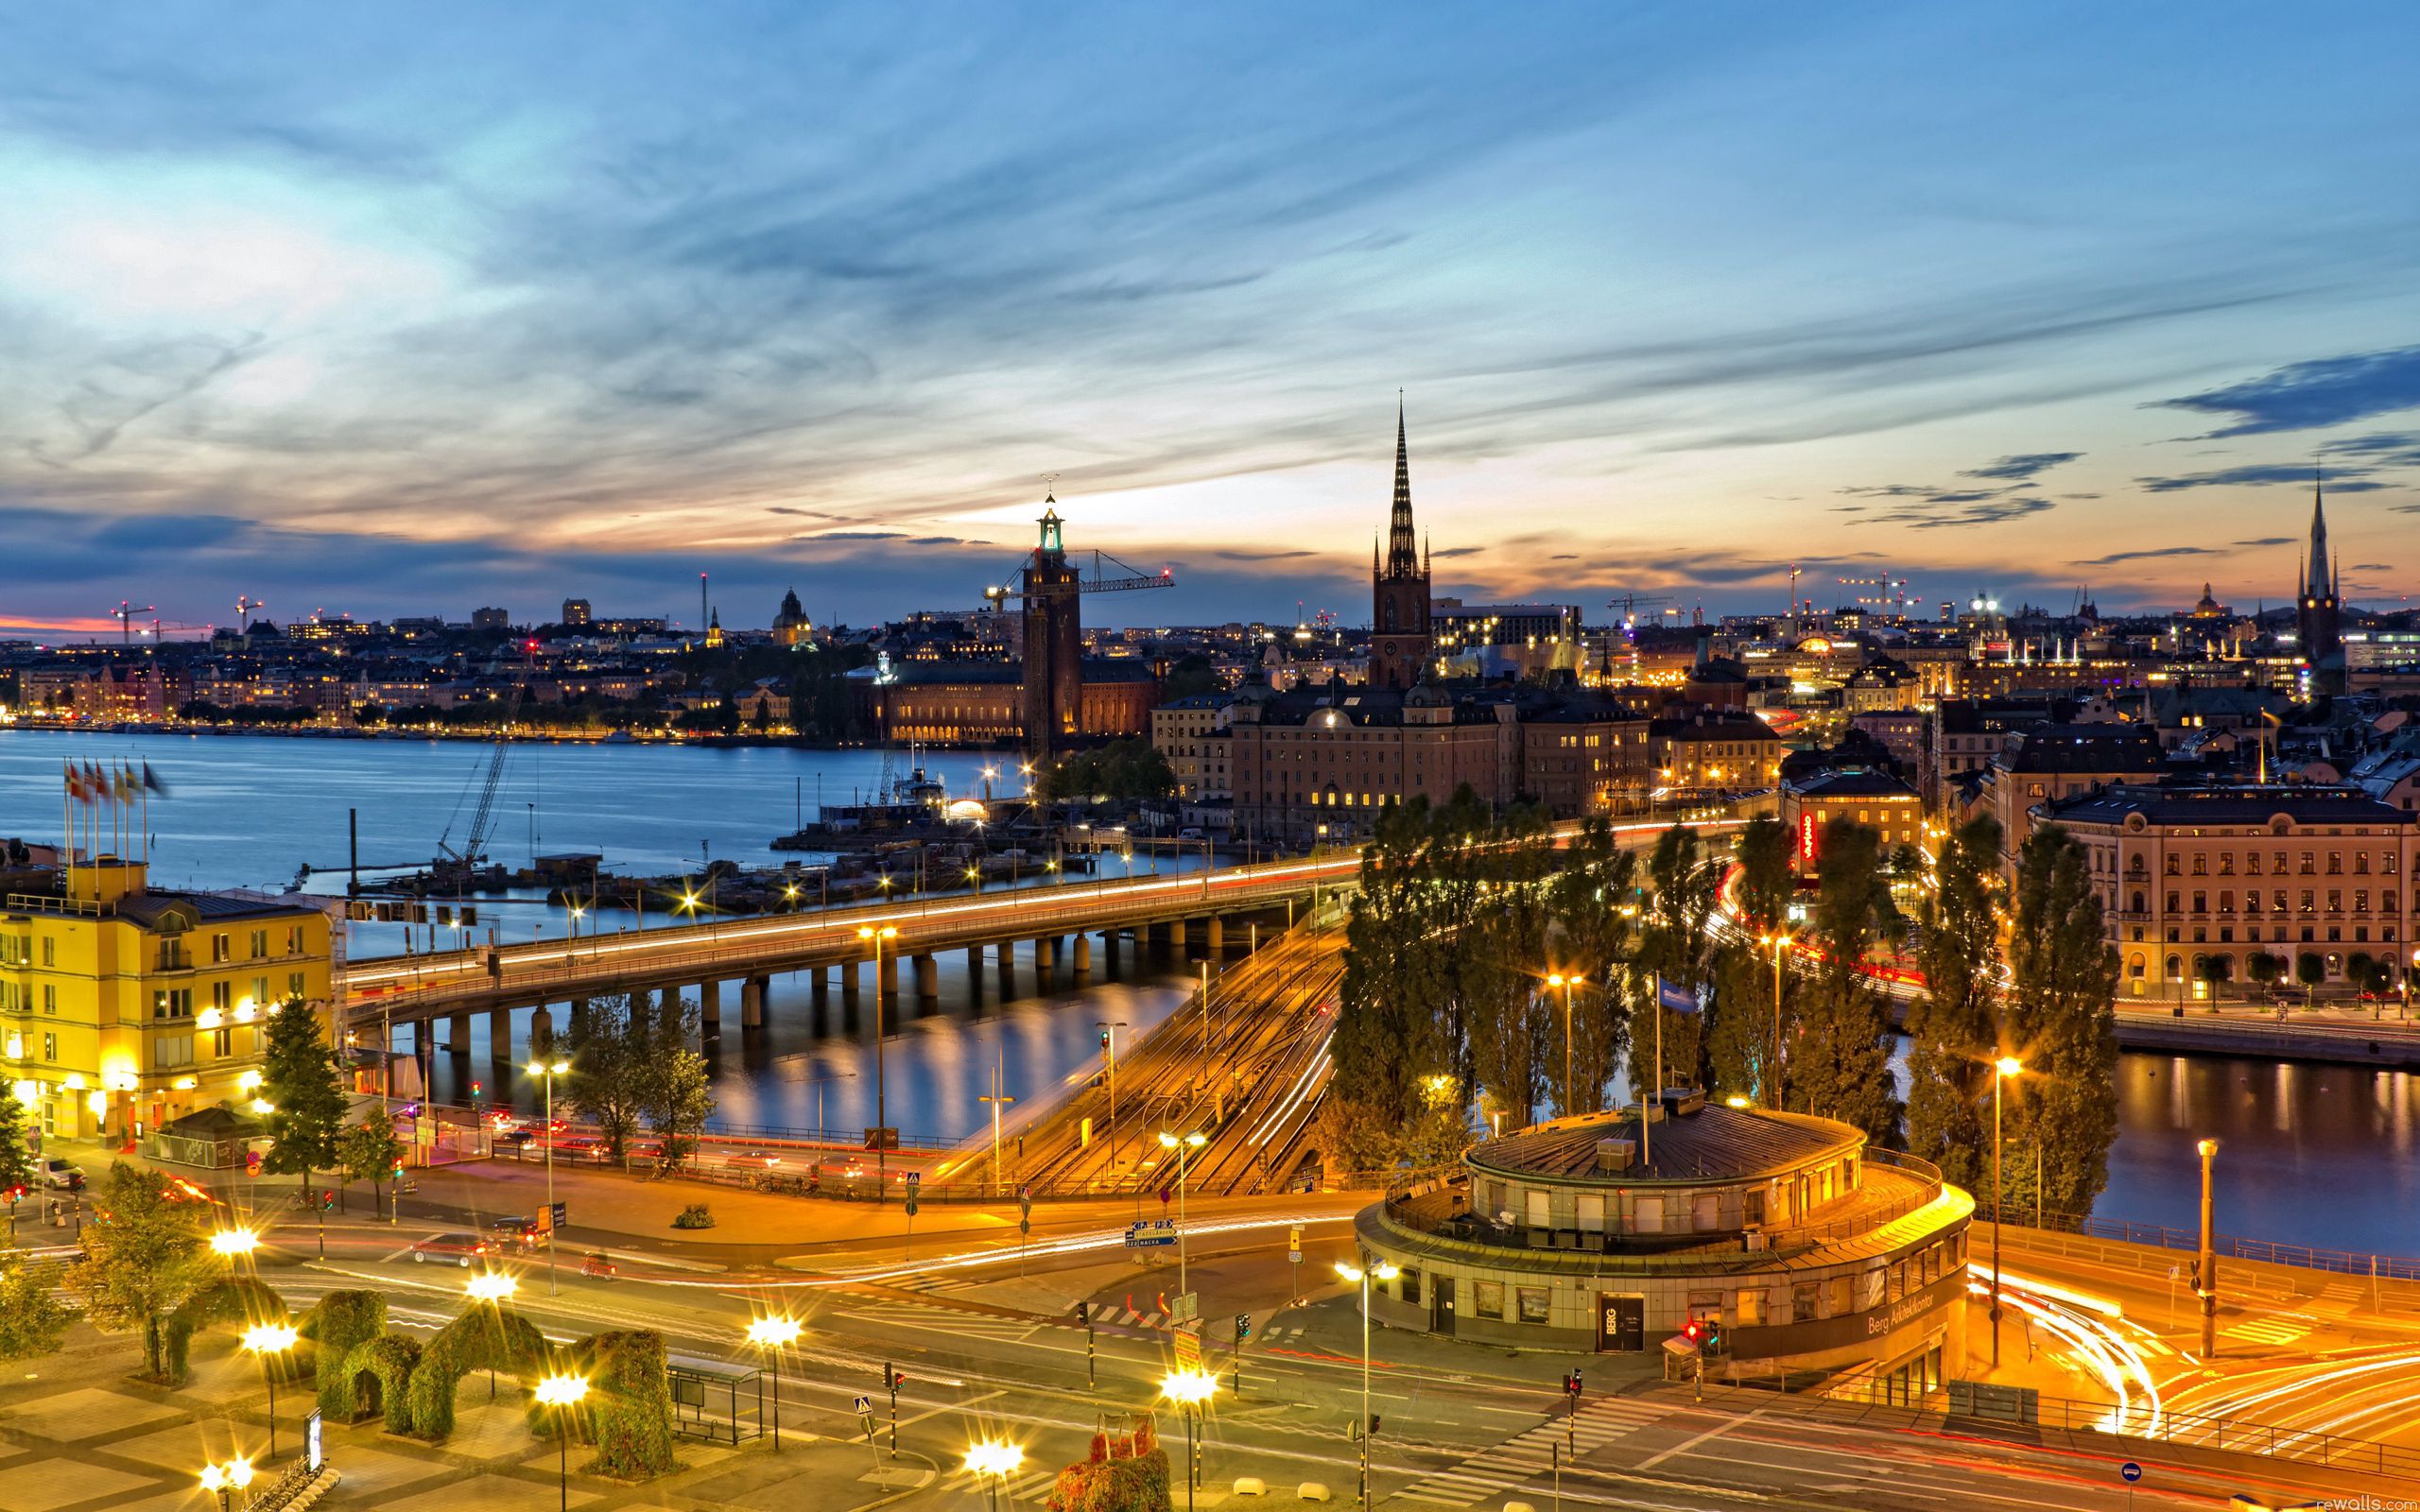 Hdデスクトップ 壁紙 街の明かり シティライツ 夕方 イブニング ストックホルム スウェーデン 都市ダウンロード無料画像